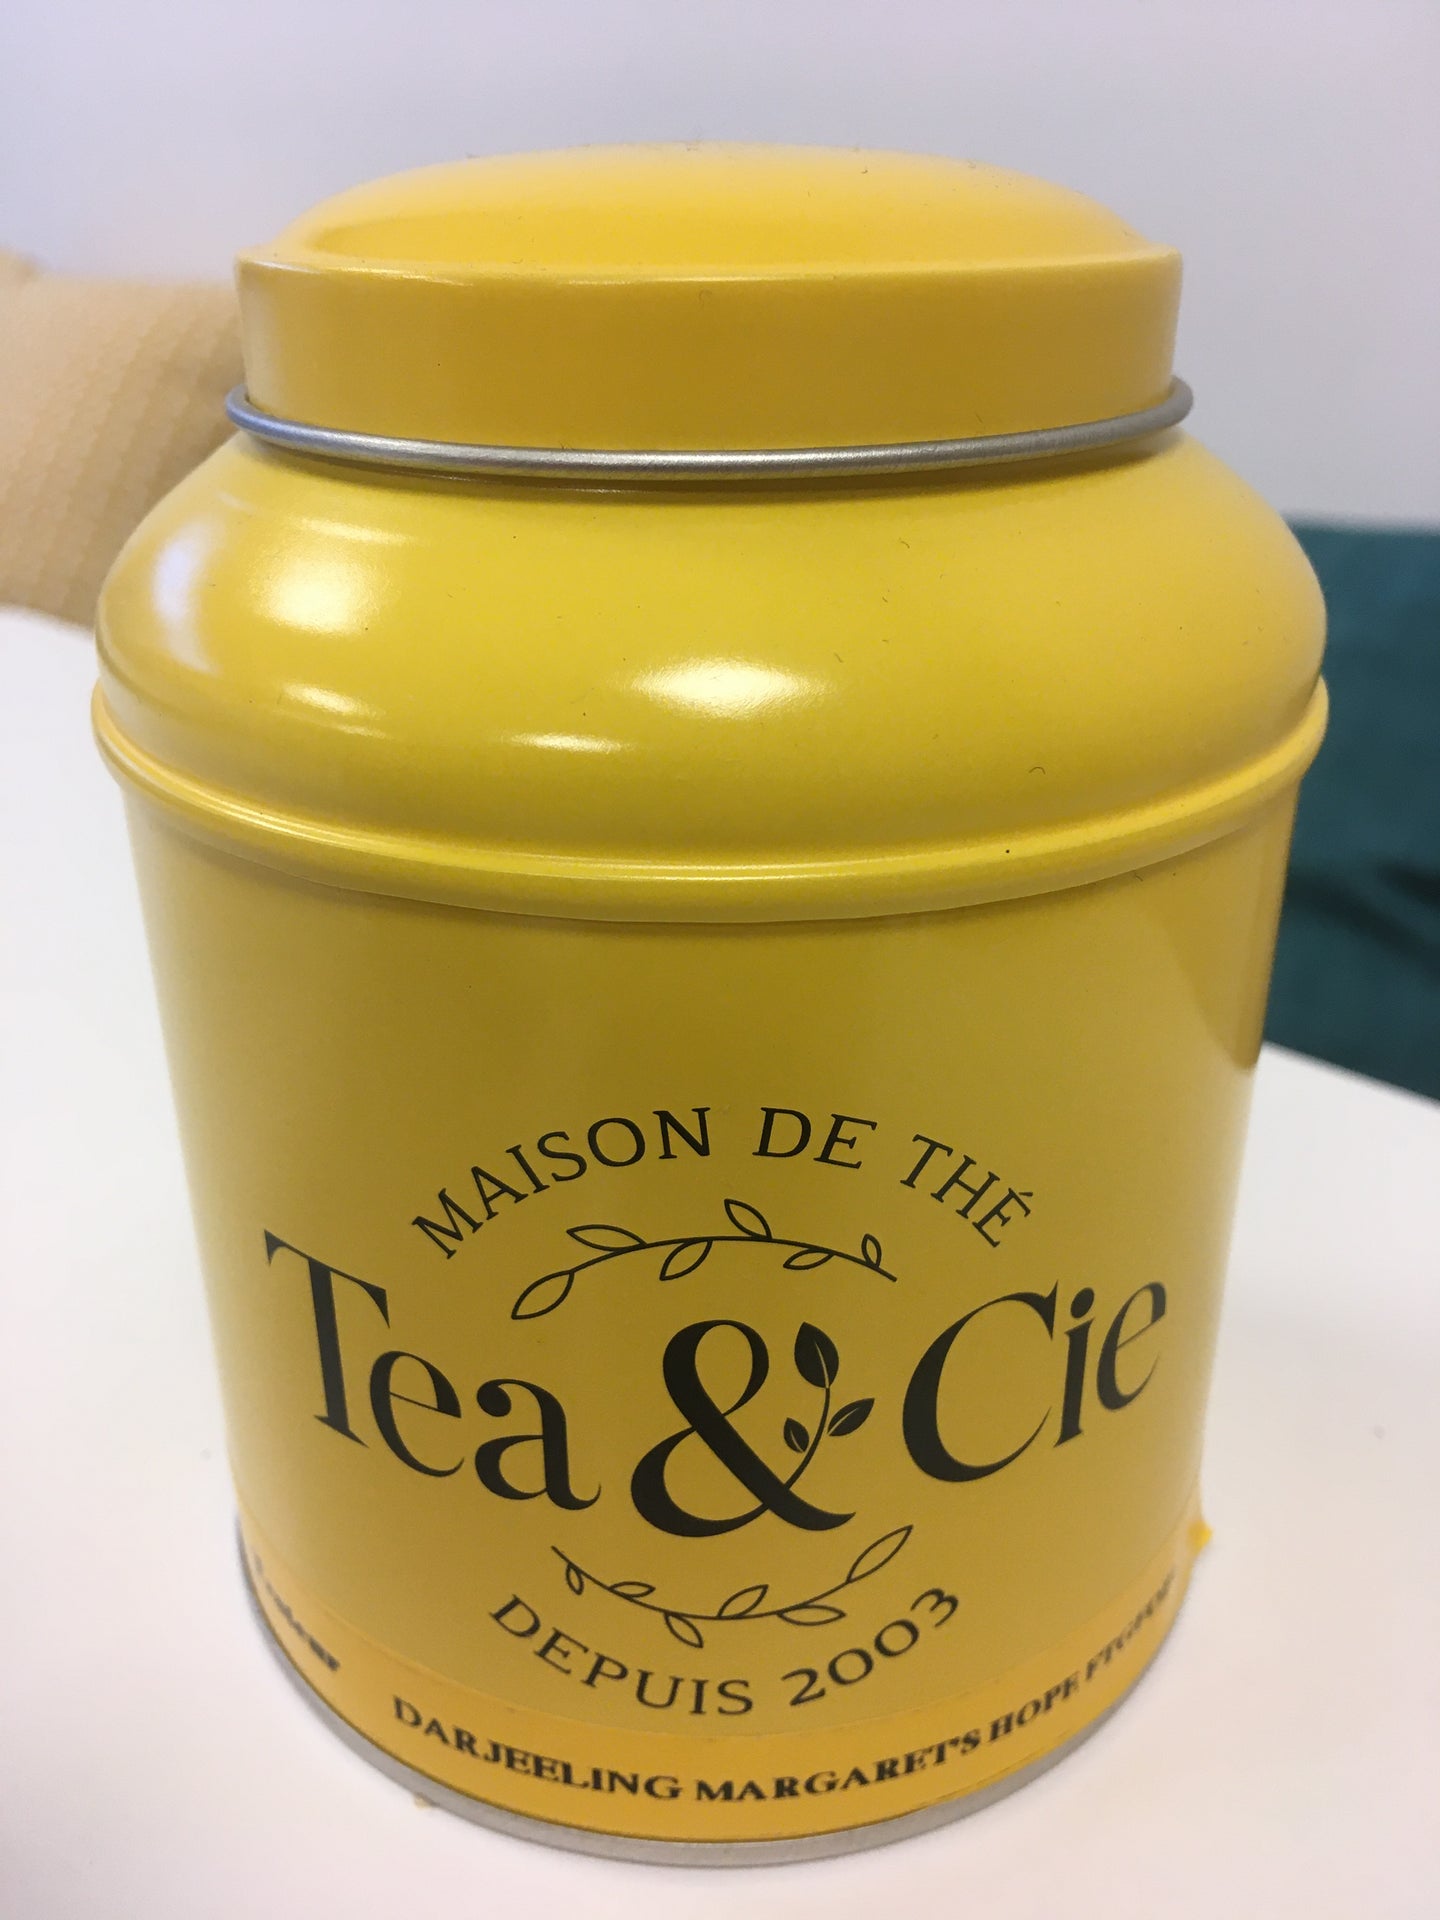 Boite de thé Darjeeling Margaret's Hope de la maison Tea&Cie